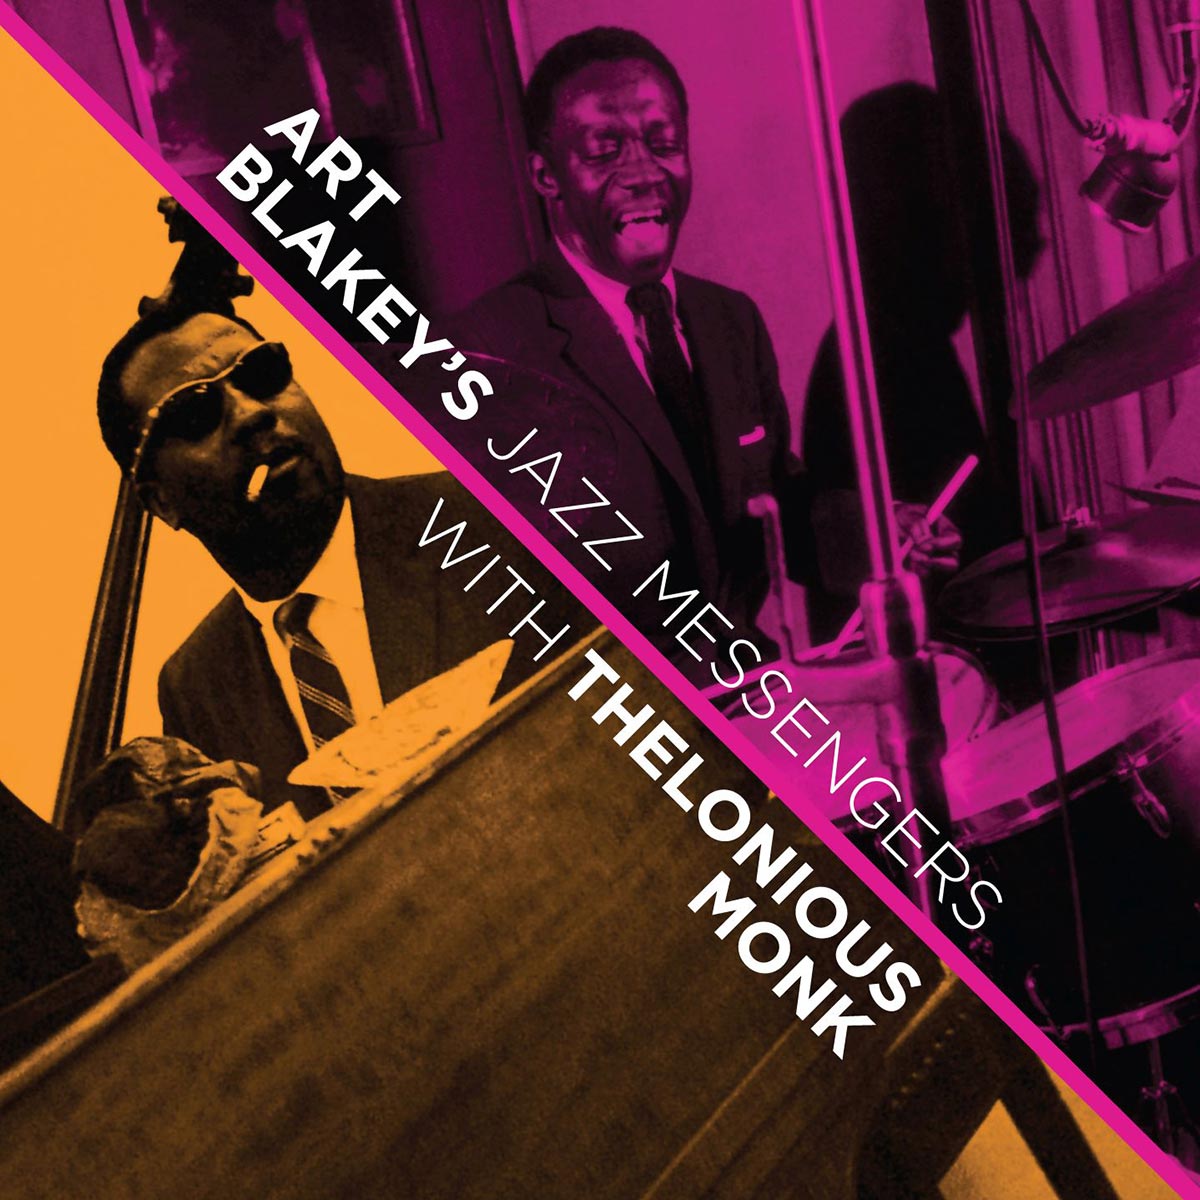 With Thelonious Monk + 4 Bonus Tracks